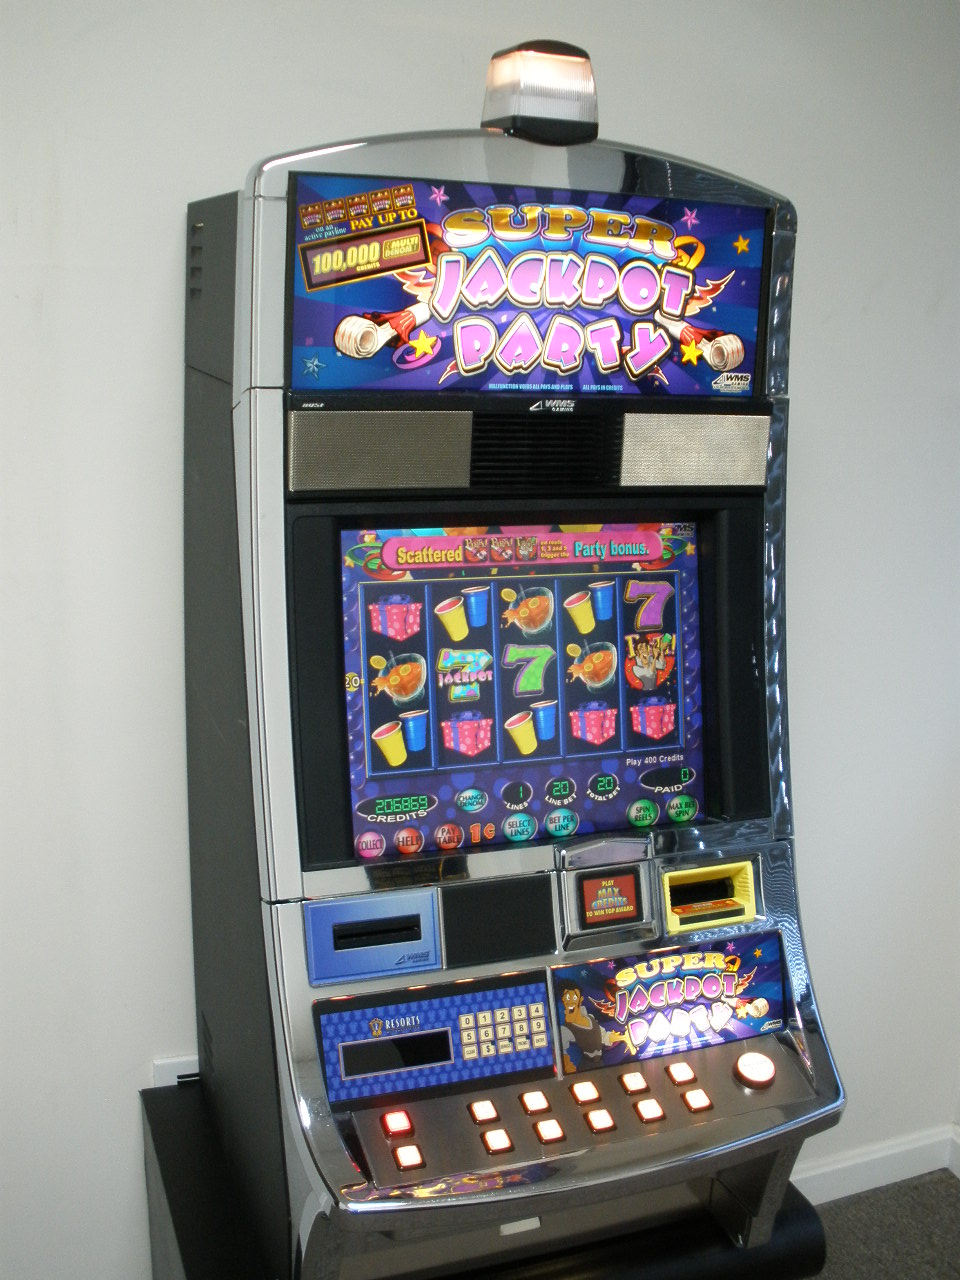 jackpot party slot machine original